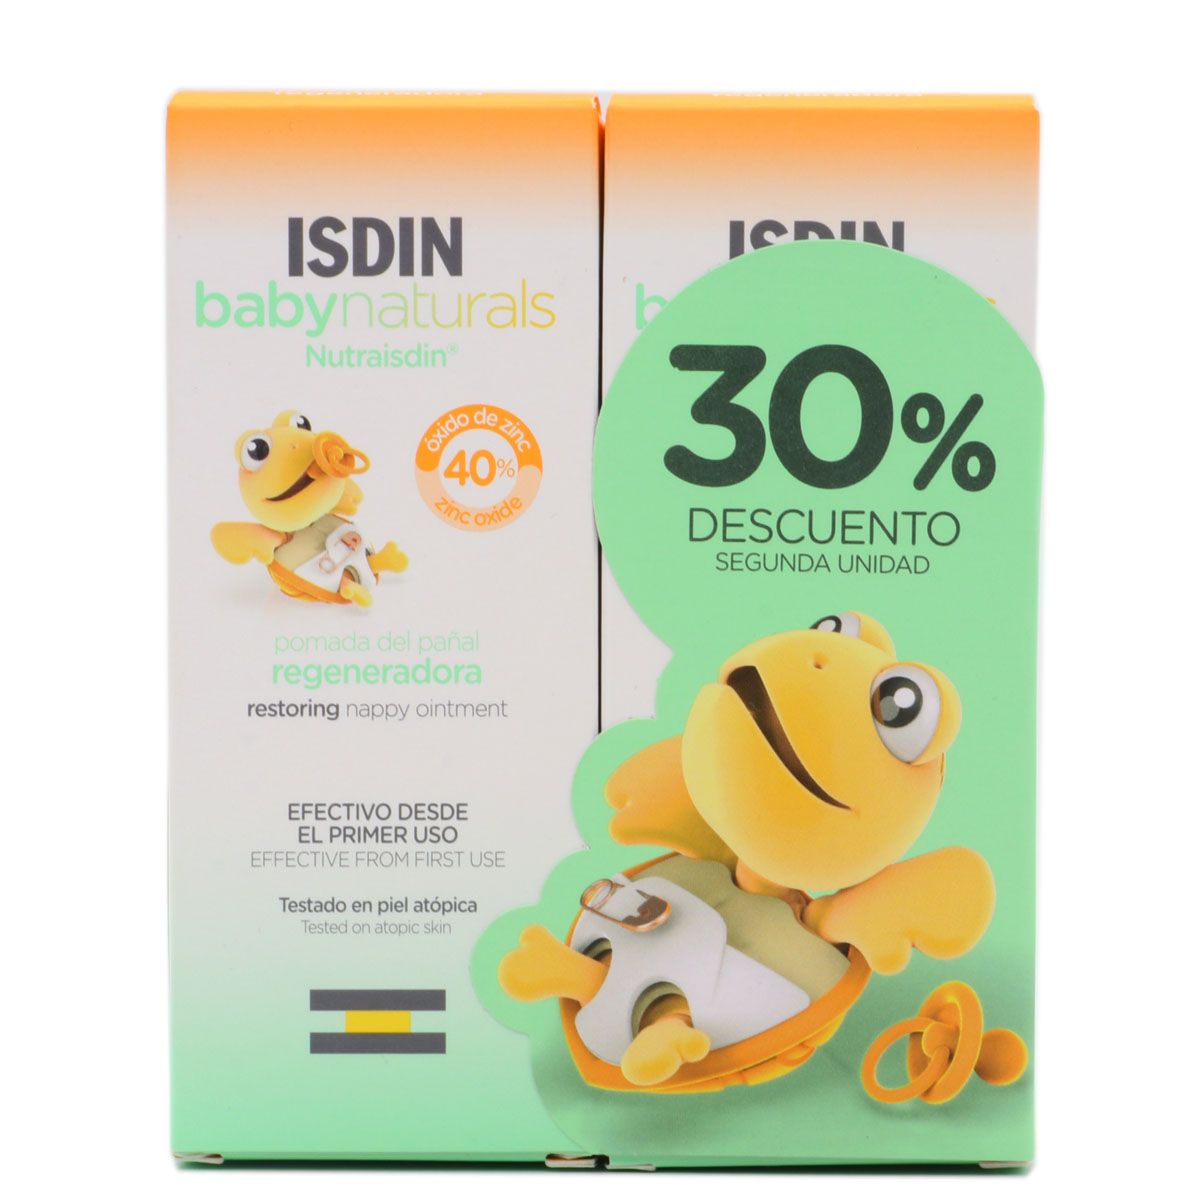 ISDIN Nutraisdin Baby Naturals ZN40 Restoring Nappy Ointment 2x100ml